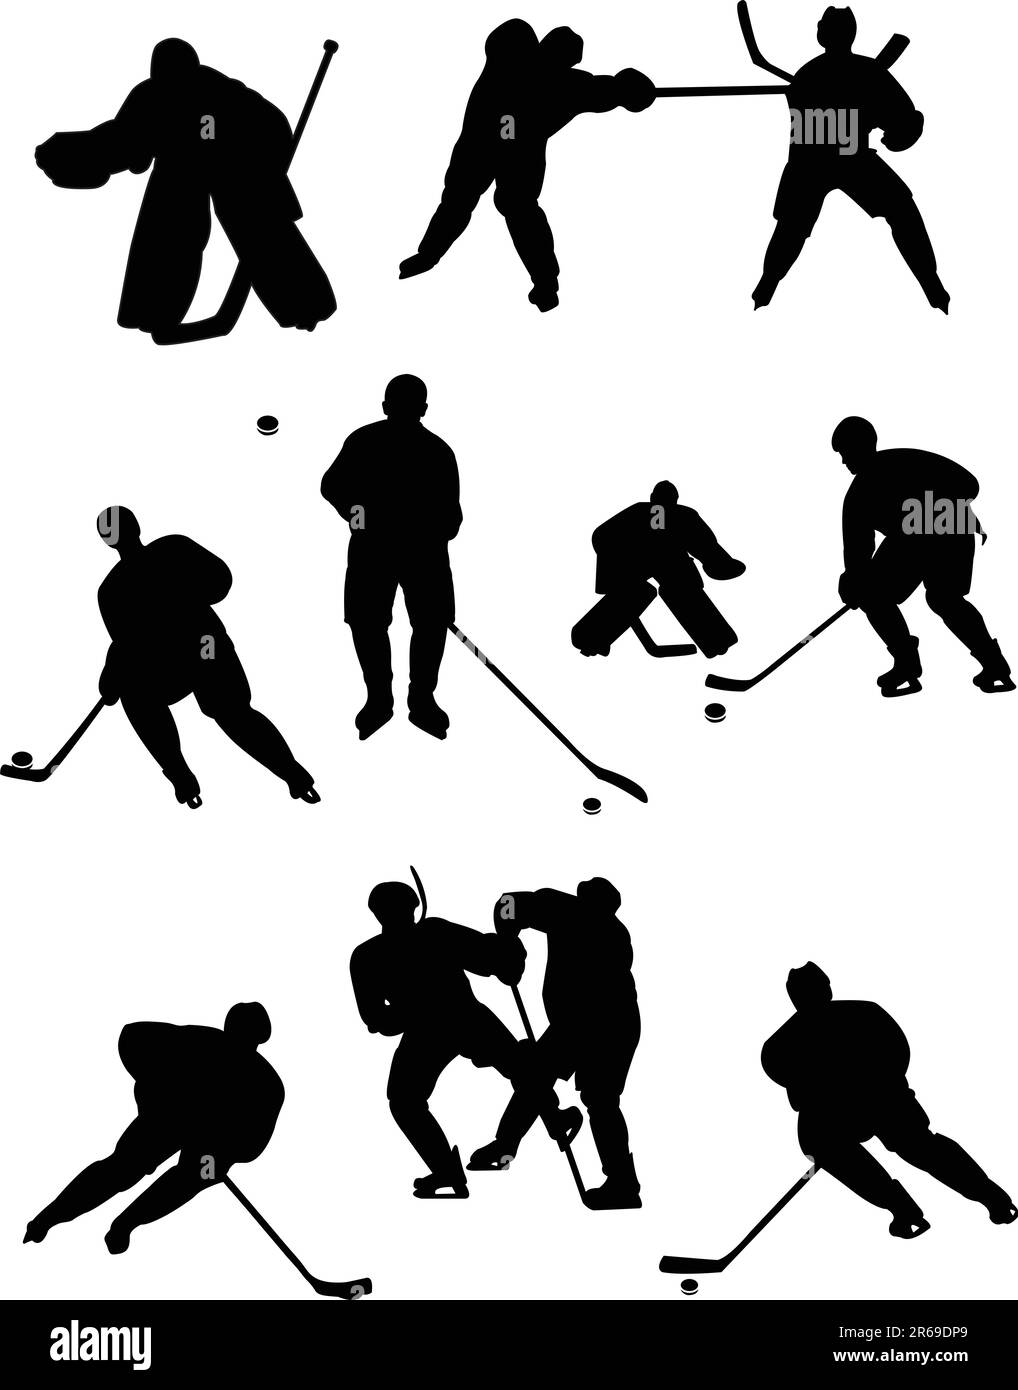 Kollektion von Hockeyspielersilhouetten - Vektor Stock Vektor